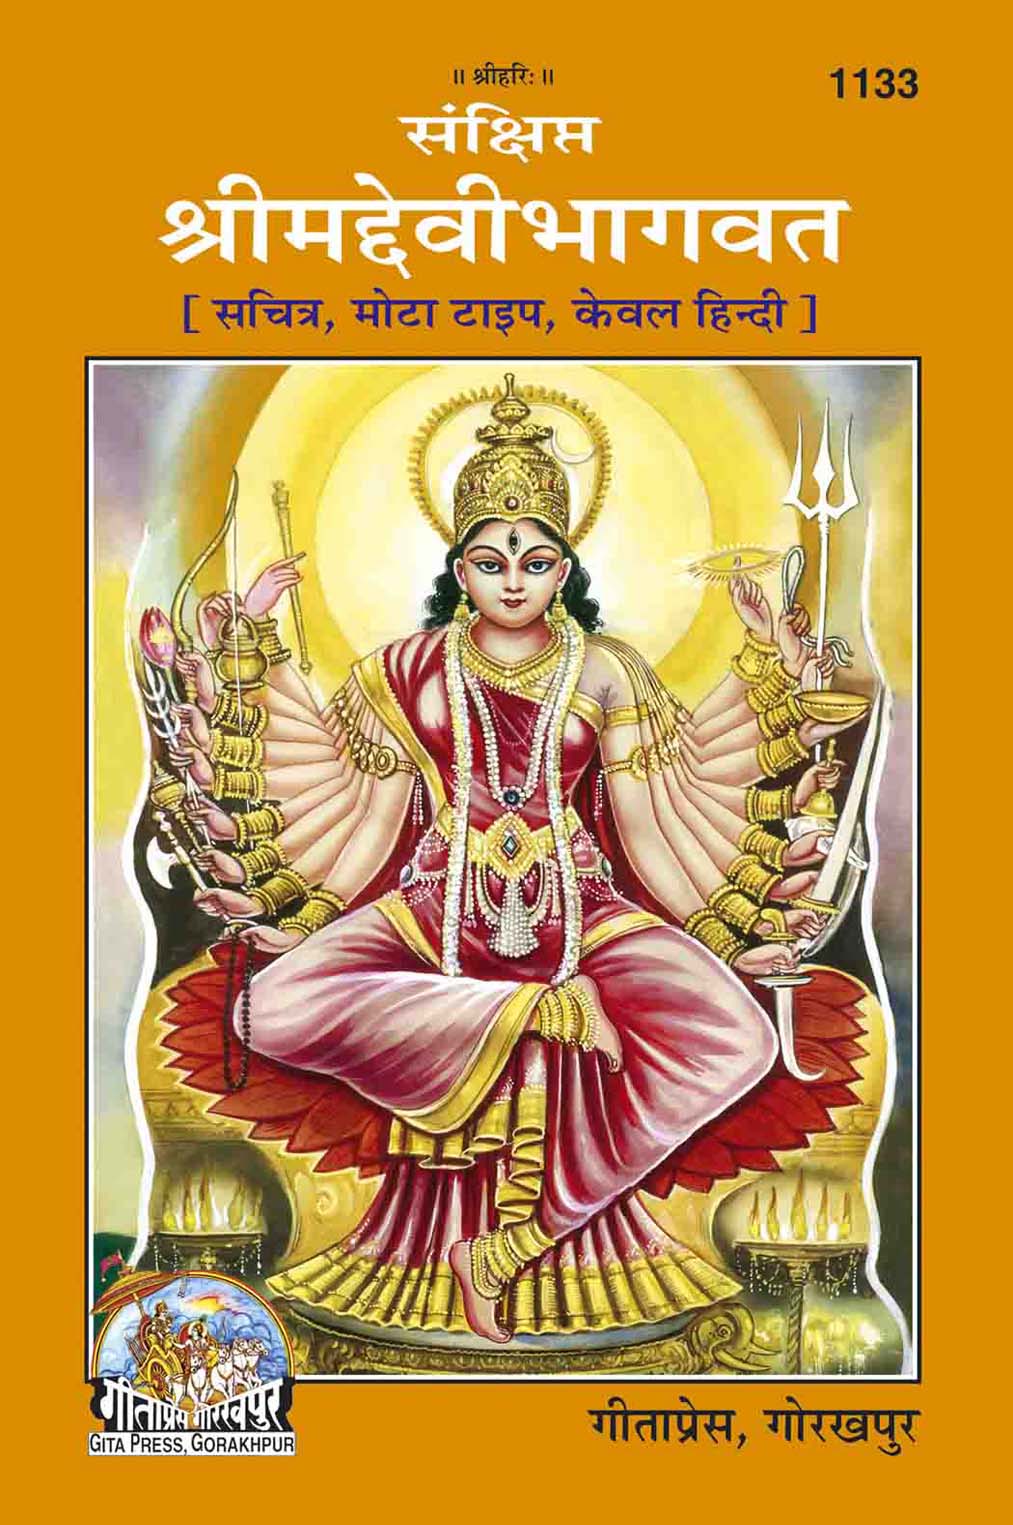 SANATAN  Sankshipt Srimad Devi Bhagavata Purana (With Pictures; Only in Hindi) by Gita Press